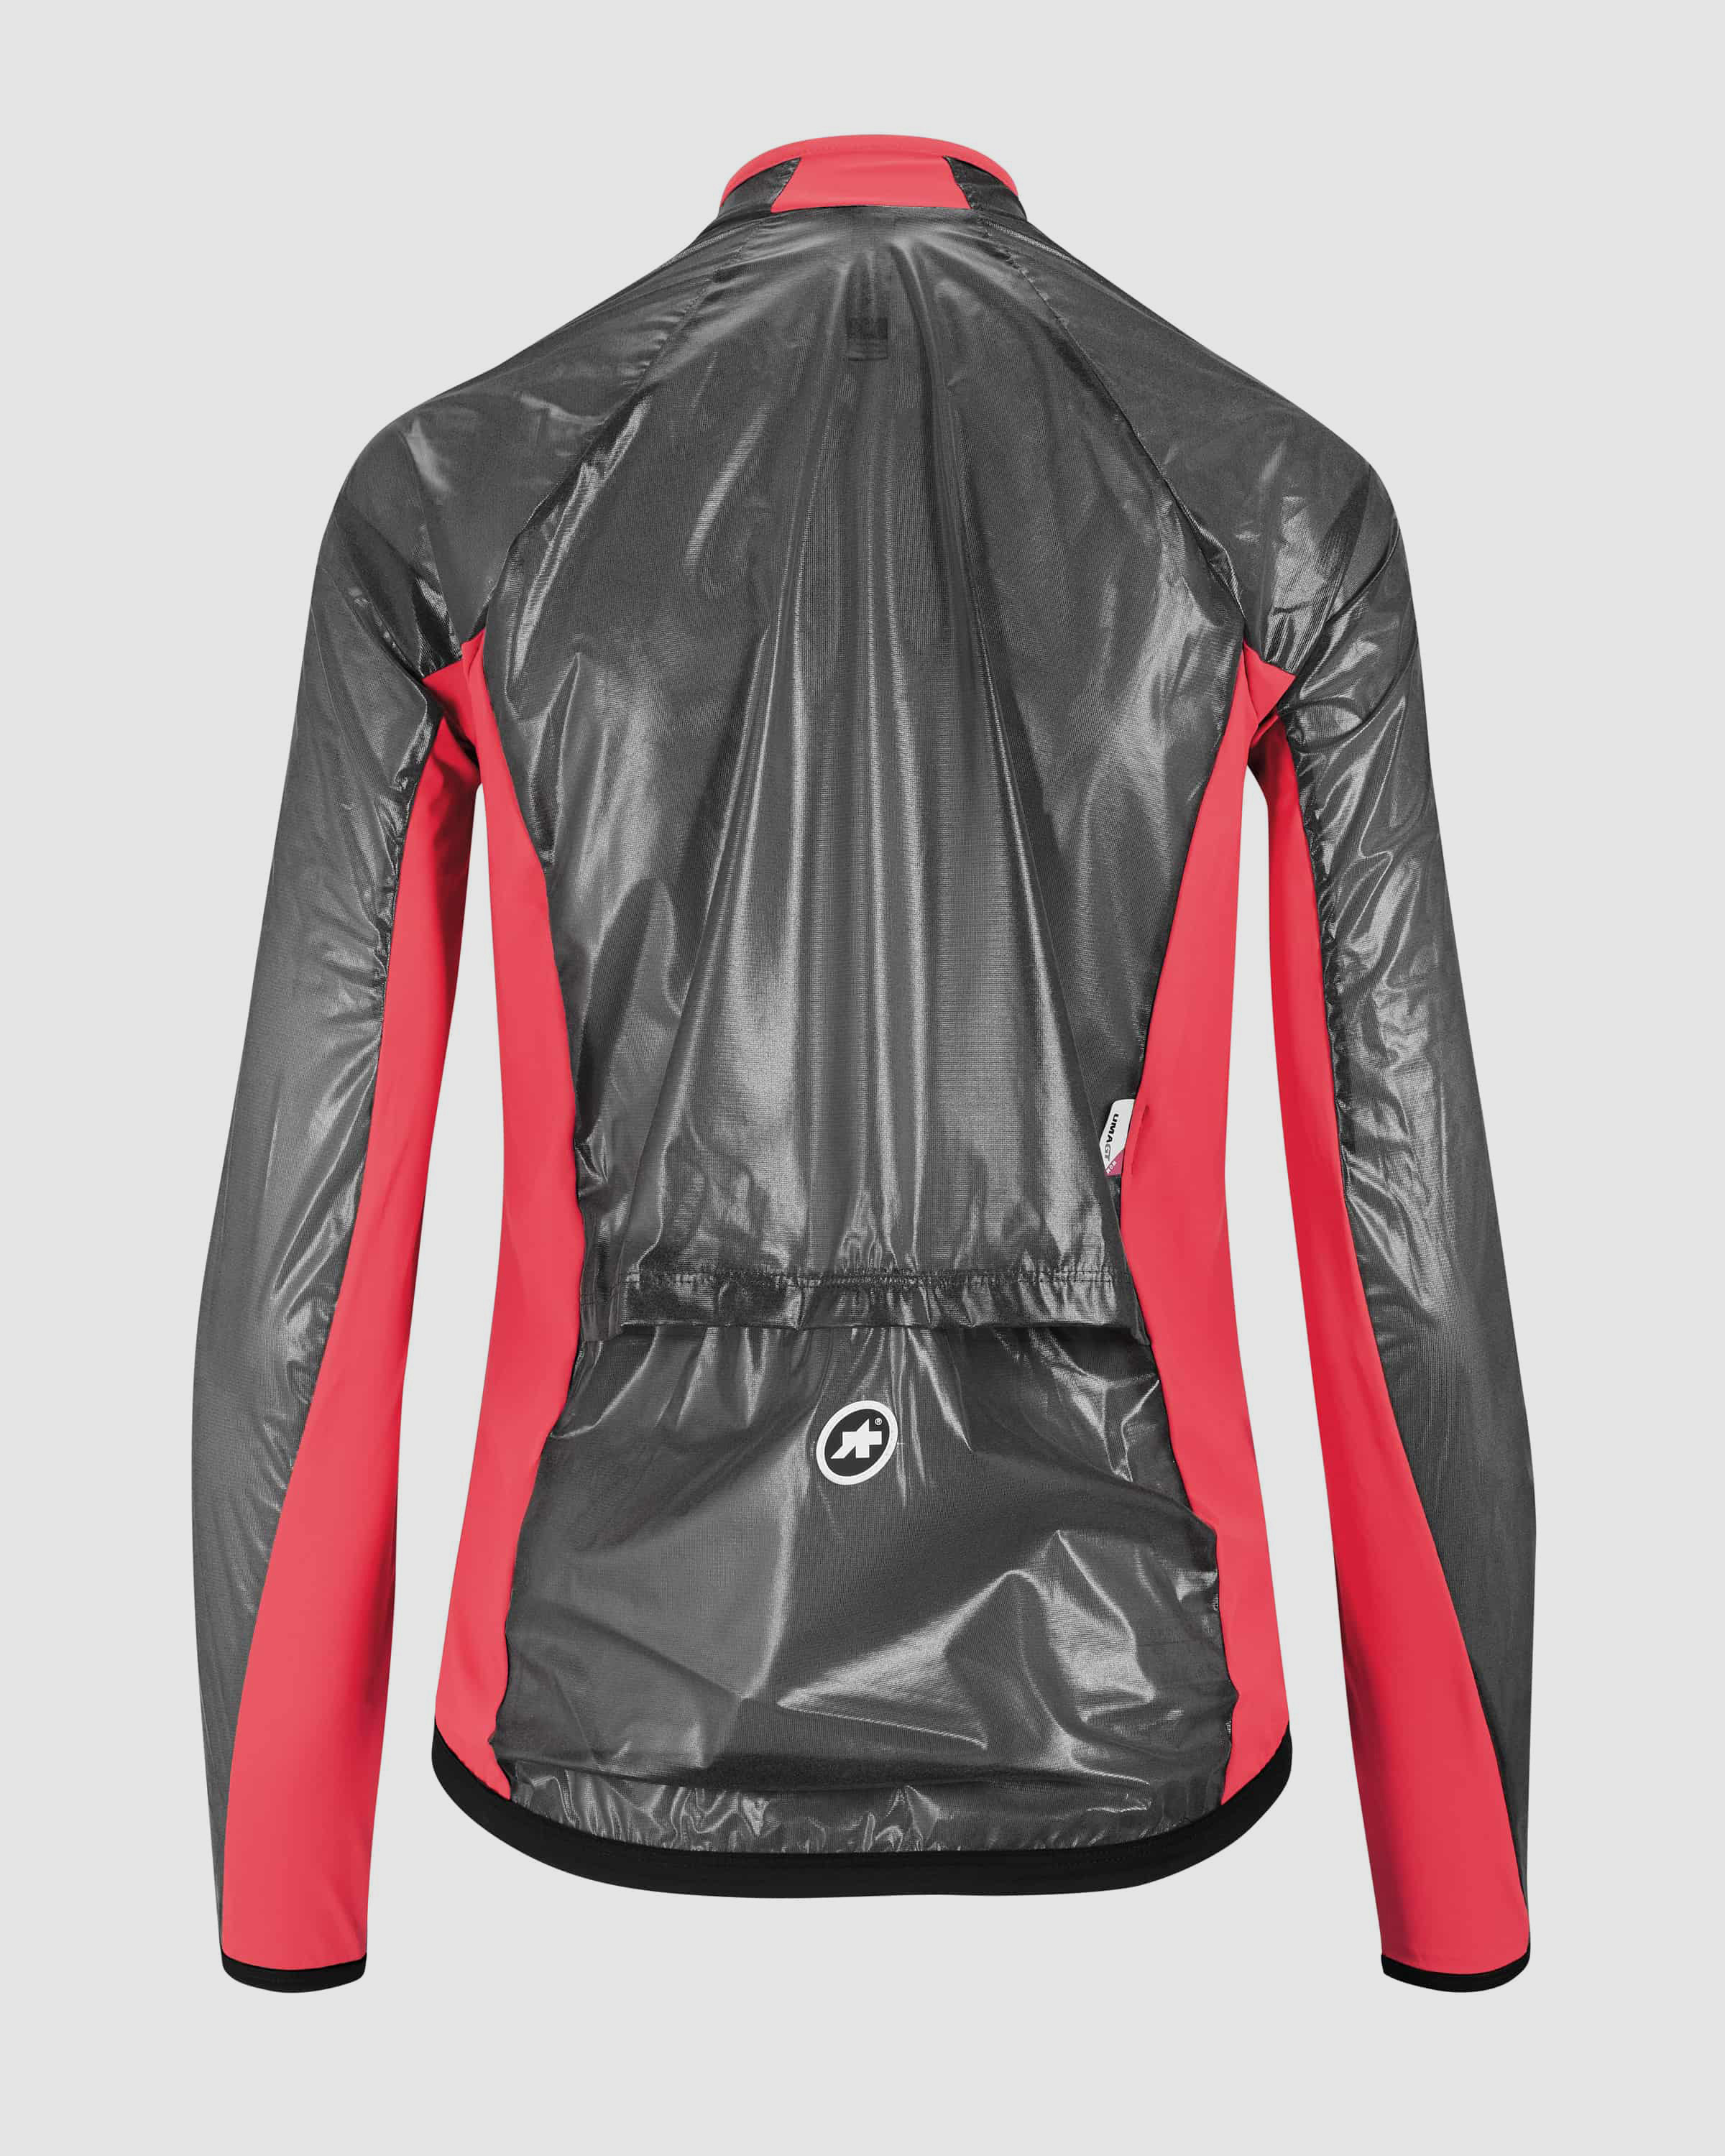 UMA GT Clima Jacket EVO - ASSOS Of Switzerland - Official Outlet